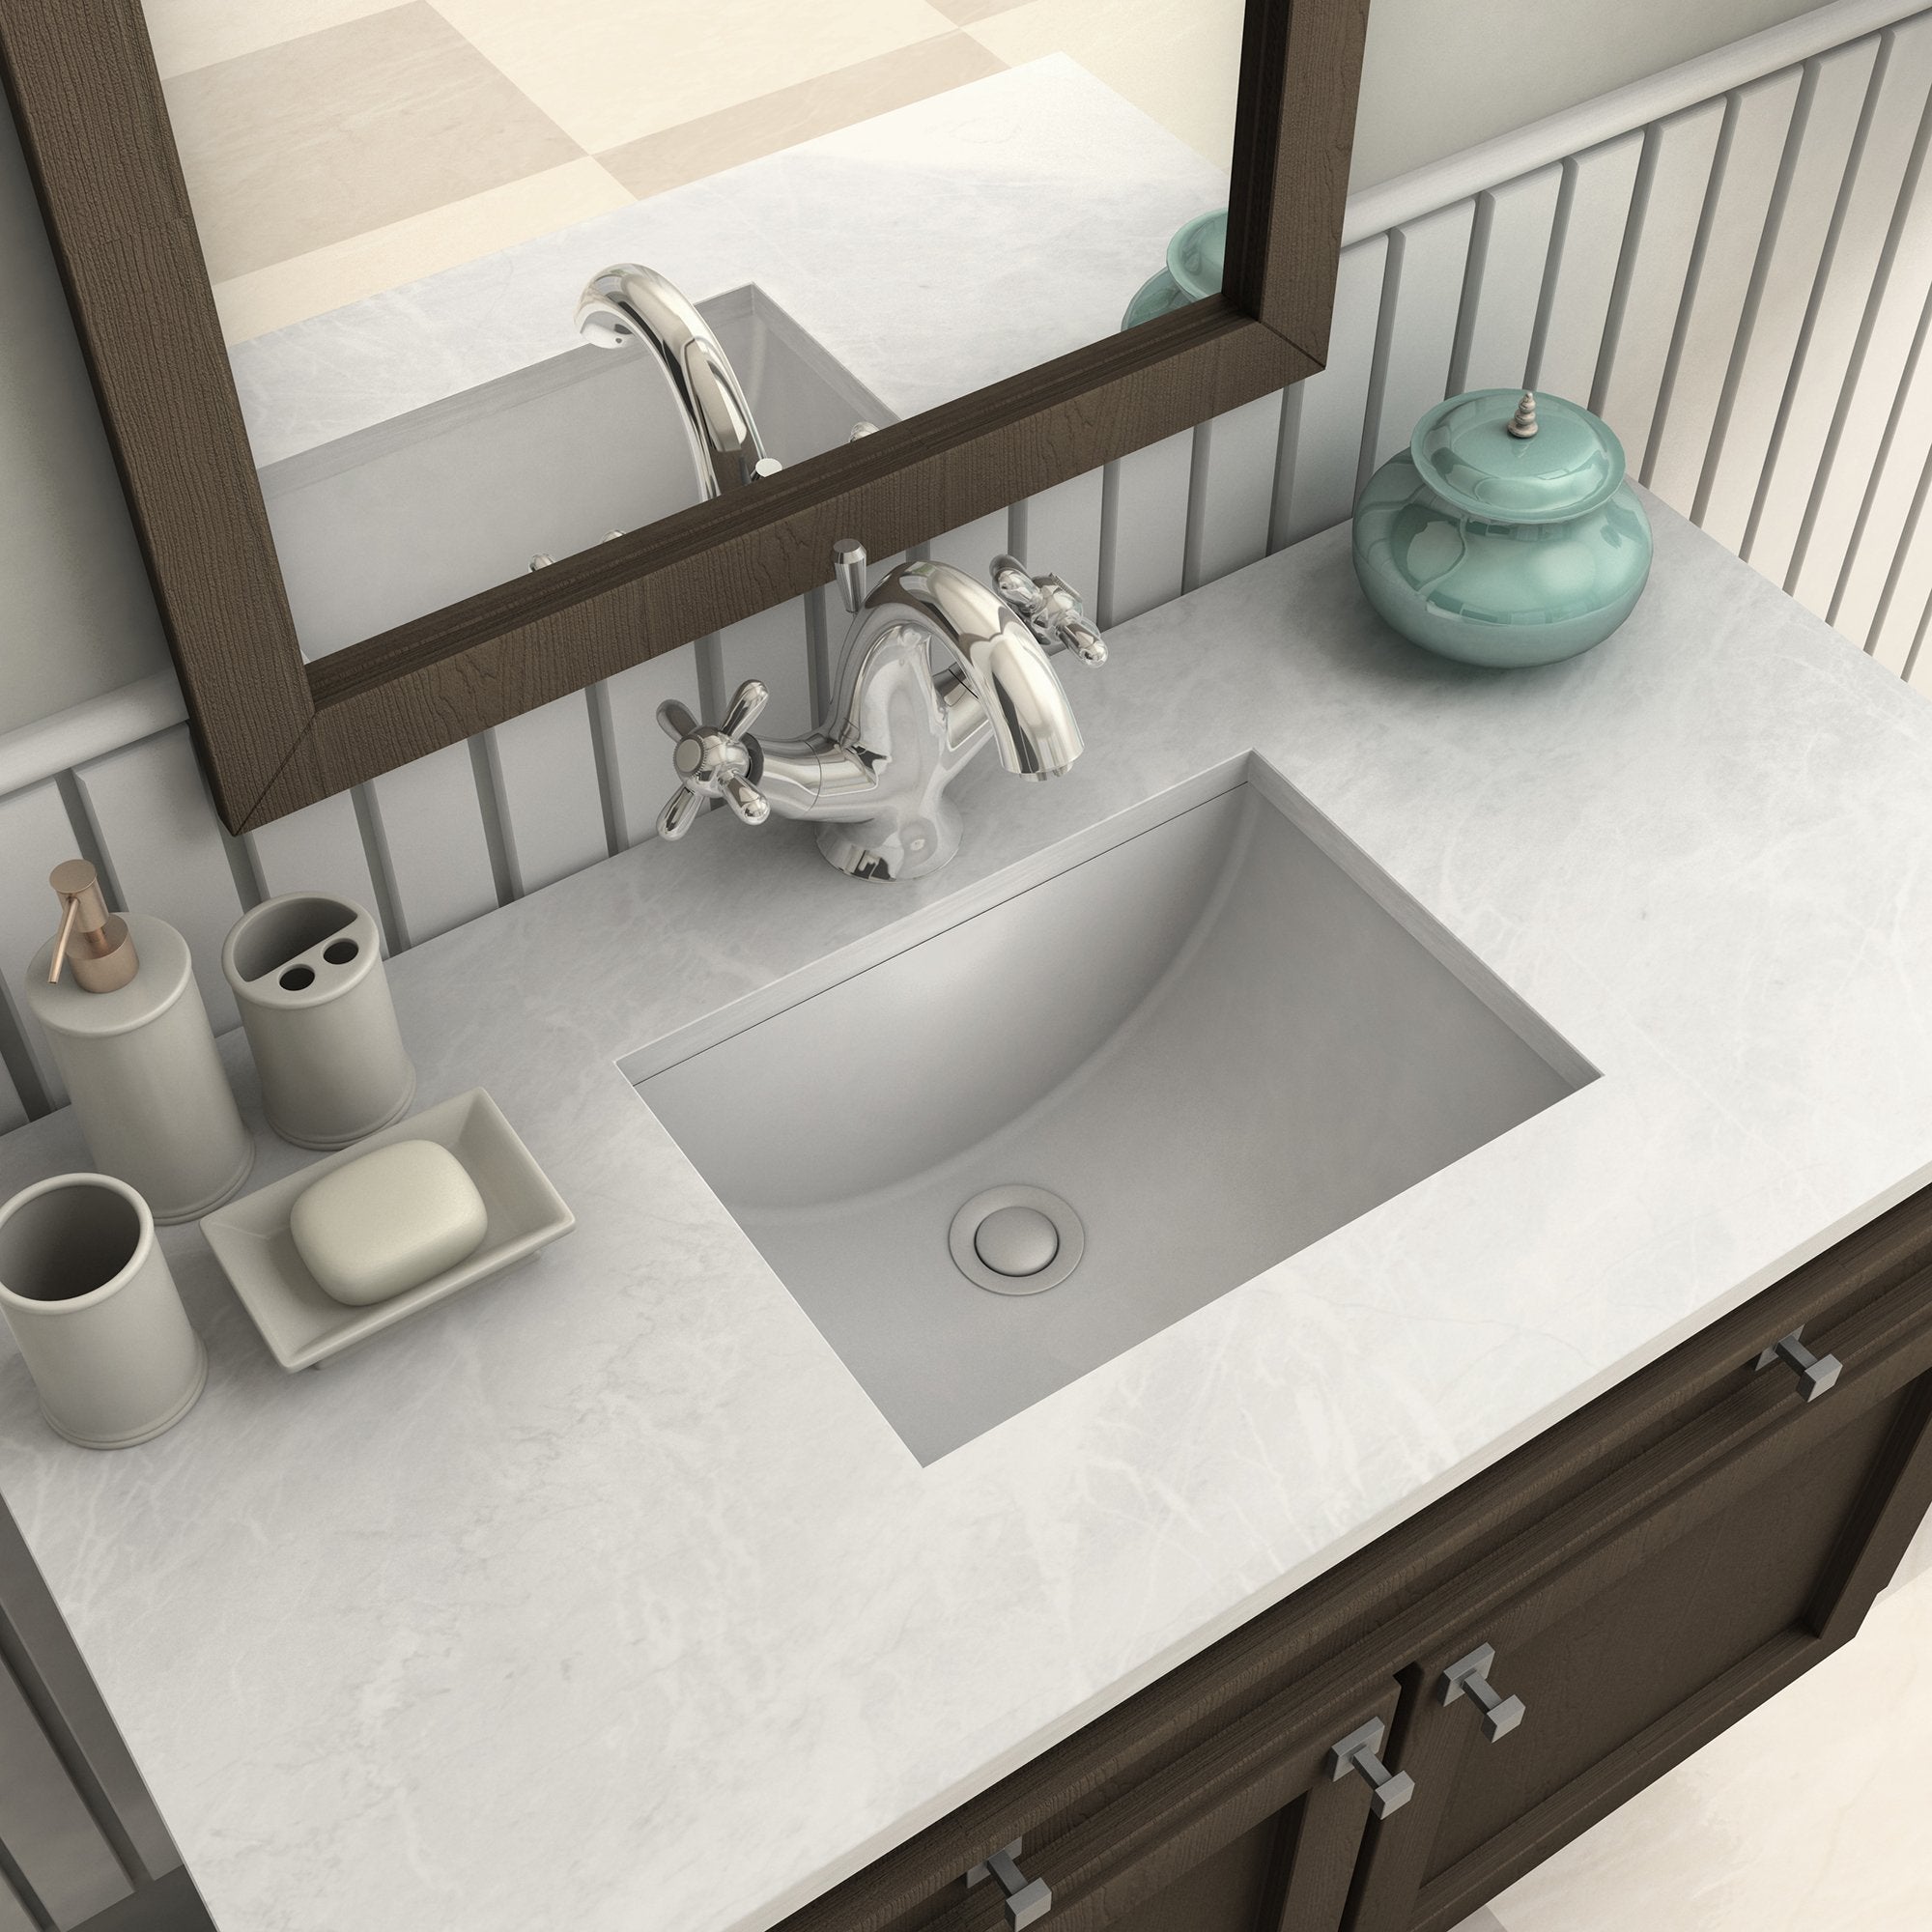 ZLINE Baldwin Bath Faucet (BLD-BF) - Rustic Kitchen & Bath - Faucets - ZLINE Kitchen and Bath